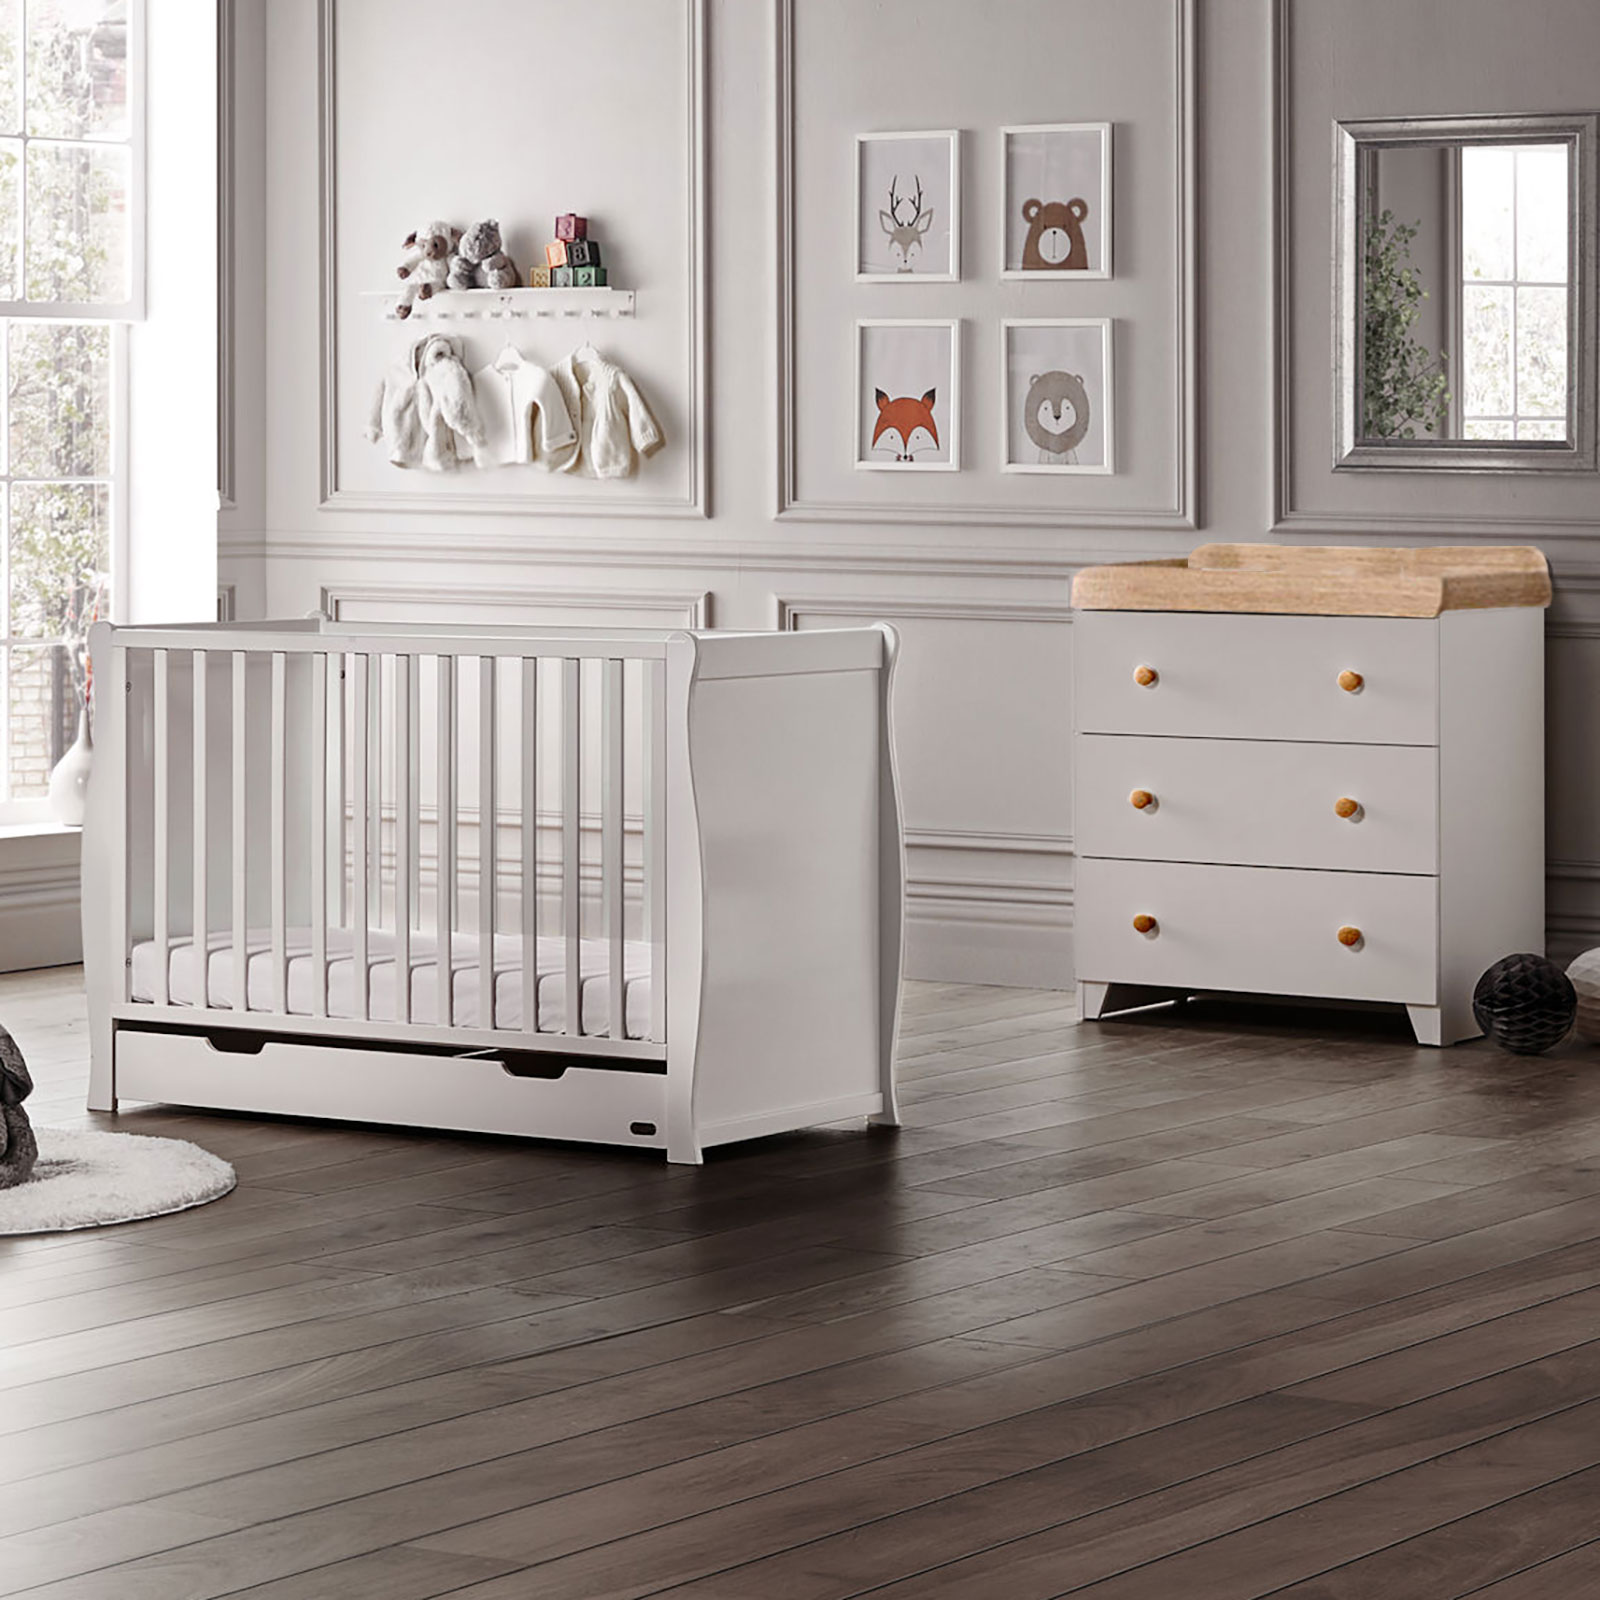 Puggle Chelford Sleigh Cot 5 Piece Nursery Furniture Set With Eco Fibre Mattress - White/White & Oak